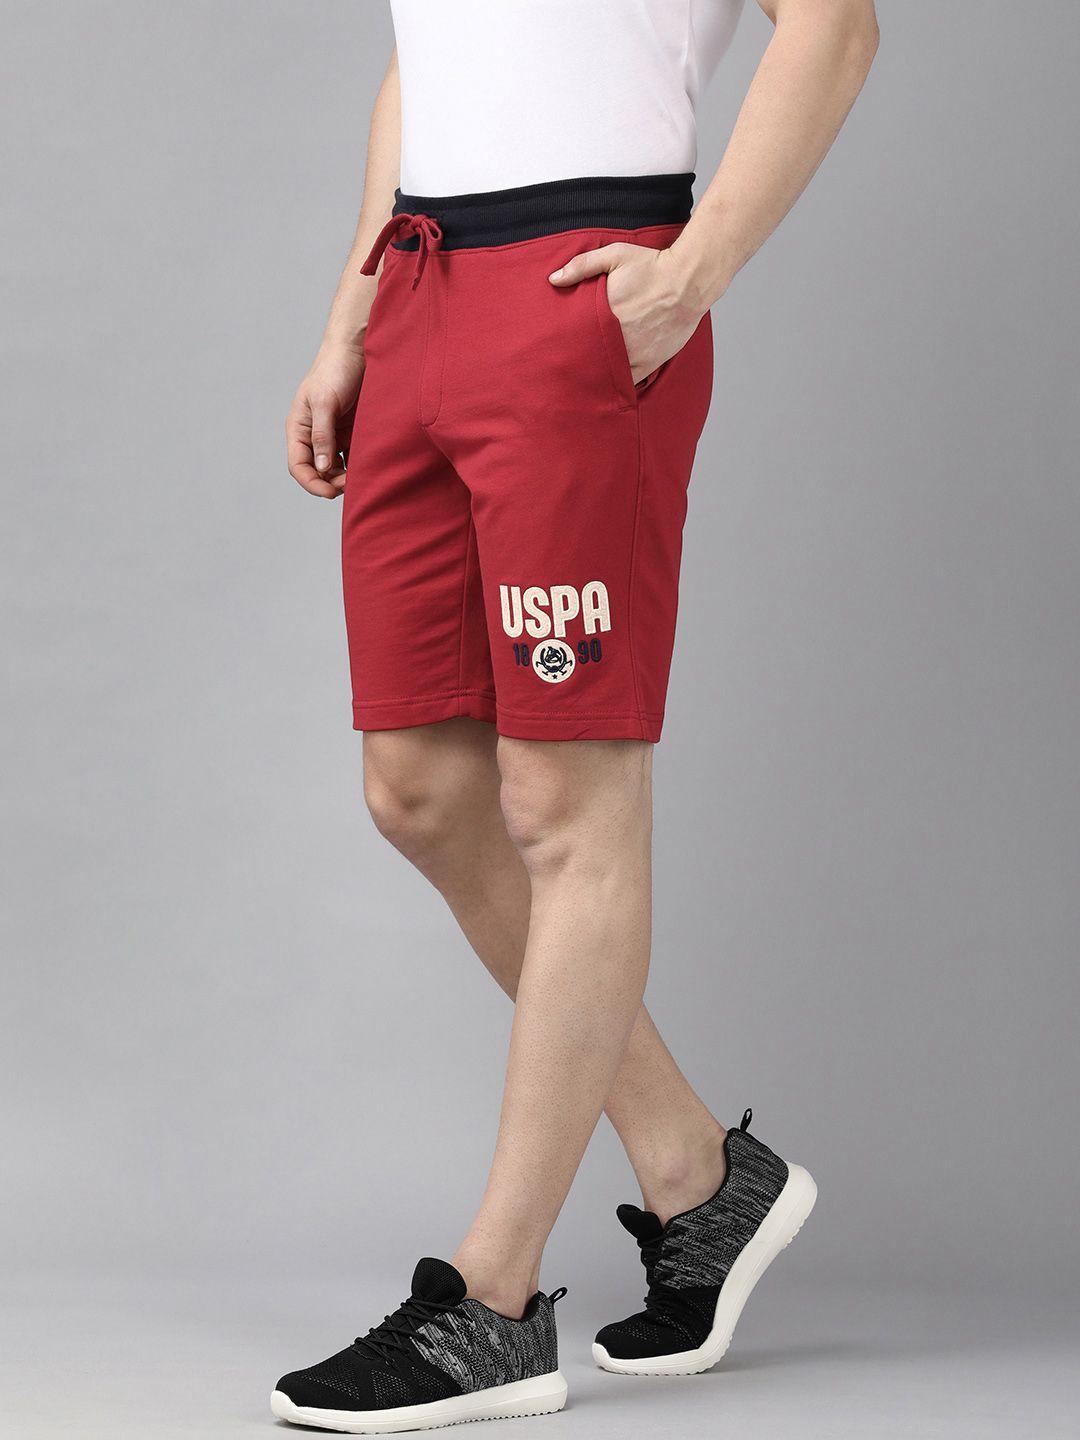 u-s-polo-assn-denim-co-men-red-&-white-printed-slim-fit-shorts